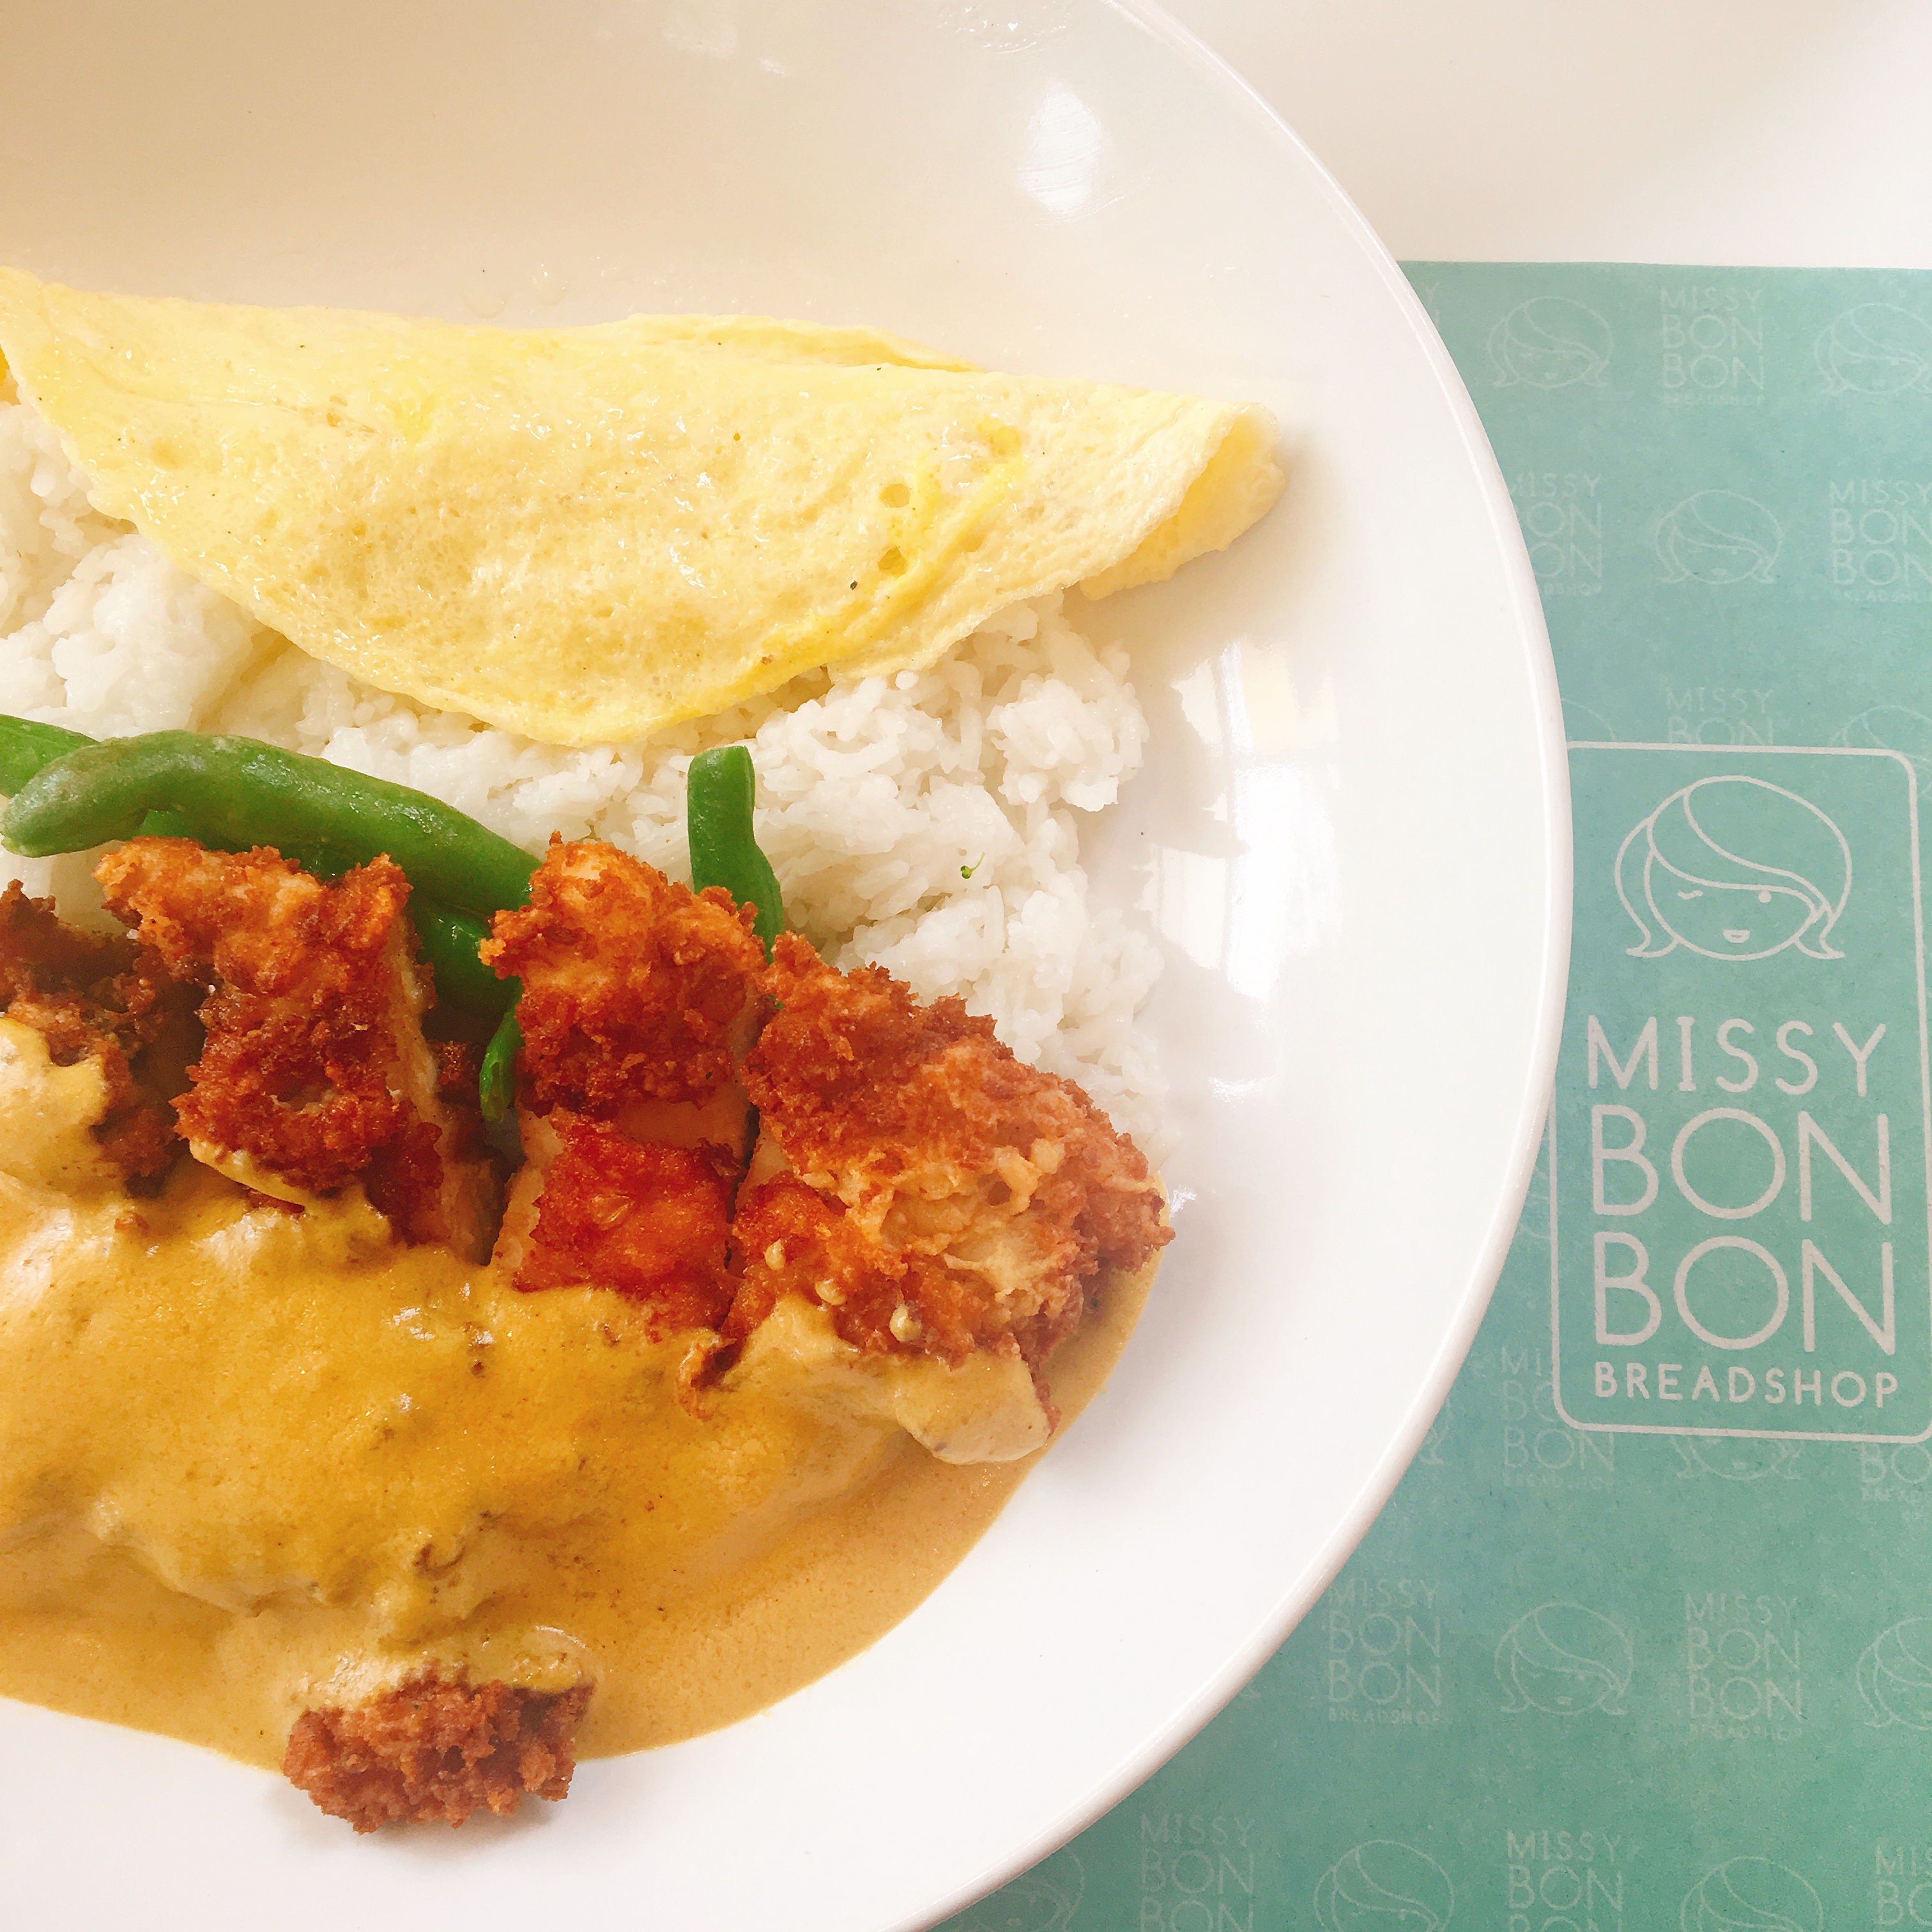 Missy Bon Bon CDO: New look, new dishes